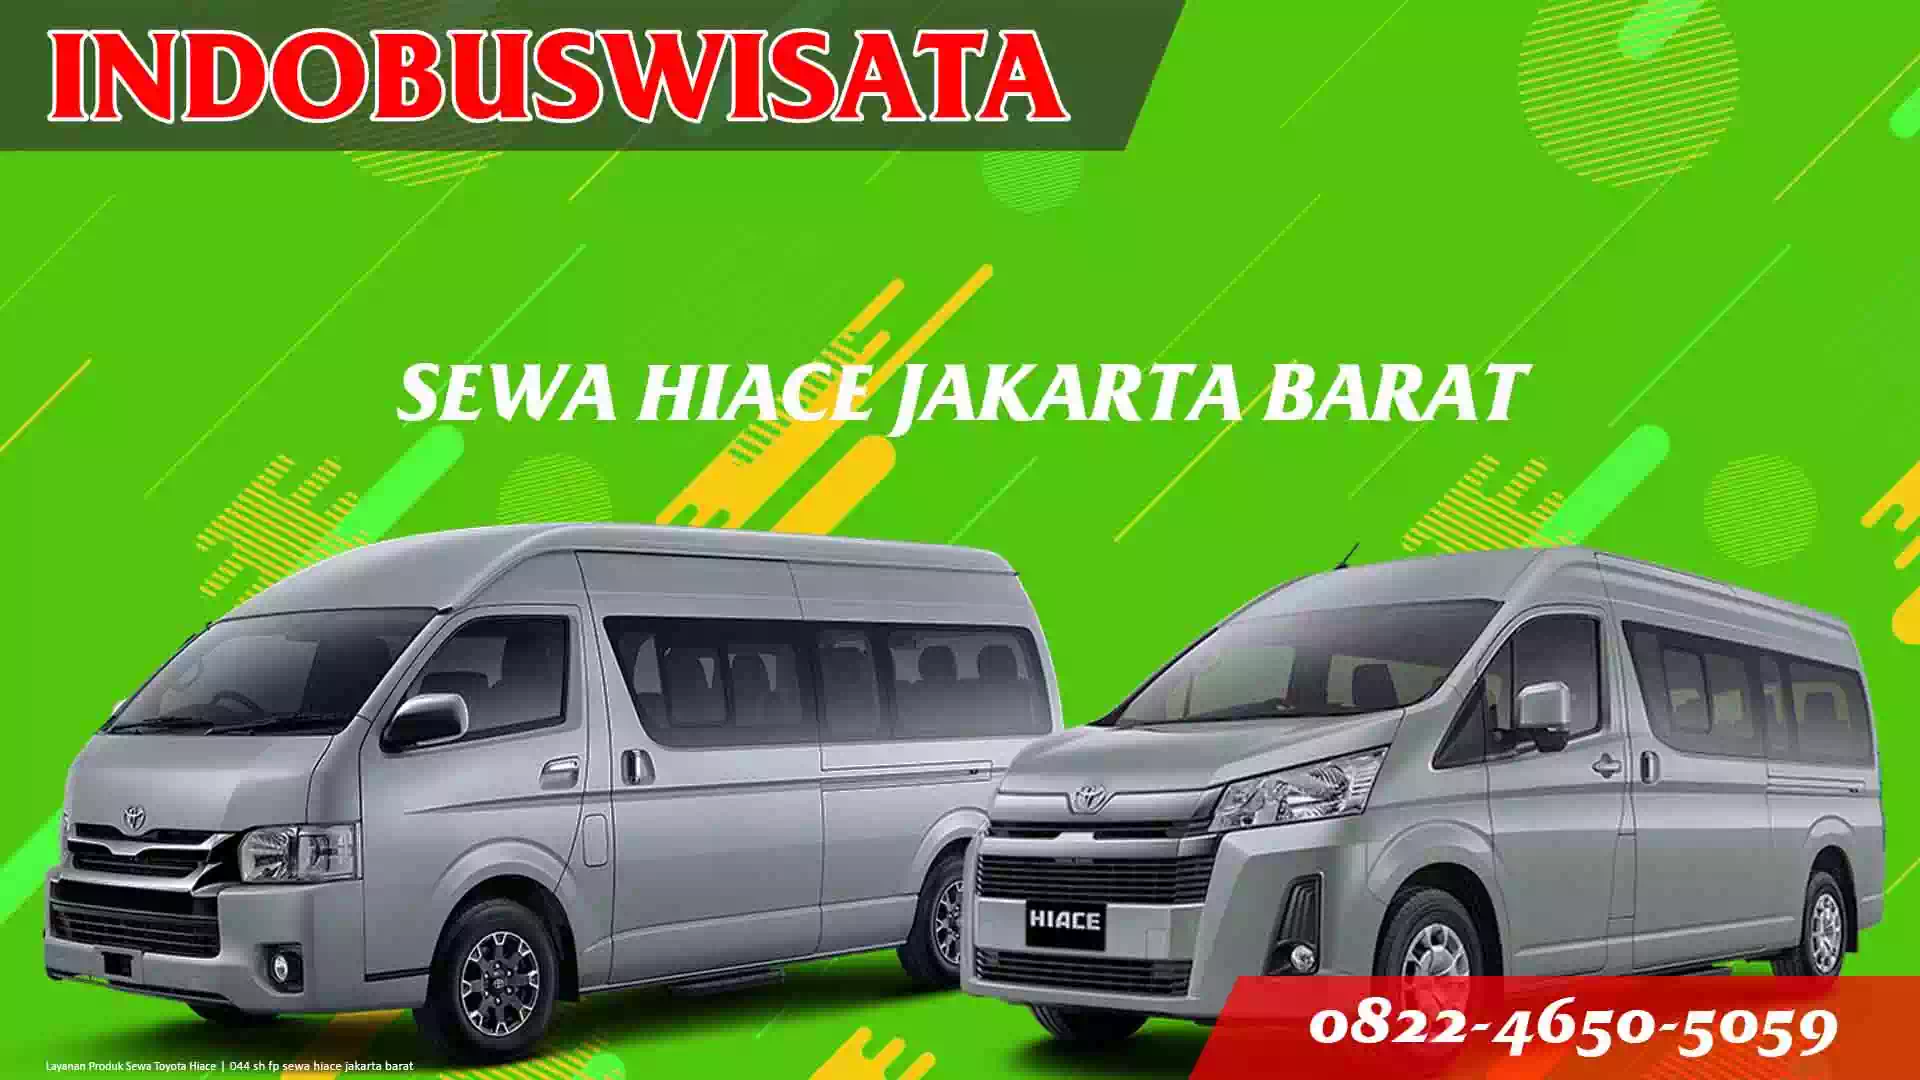 044 Sh Fp Sewa Hiace Jakarta Barat Indobuswisata